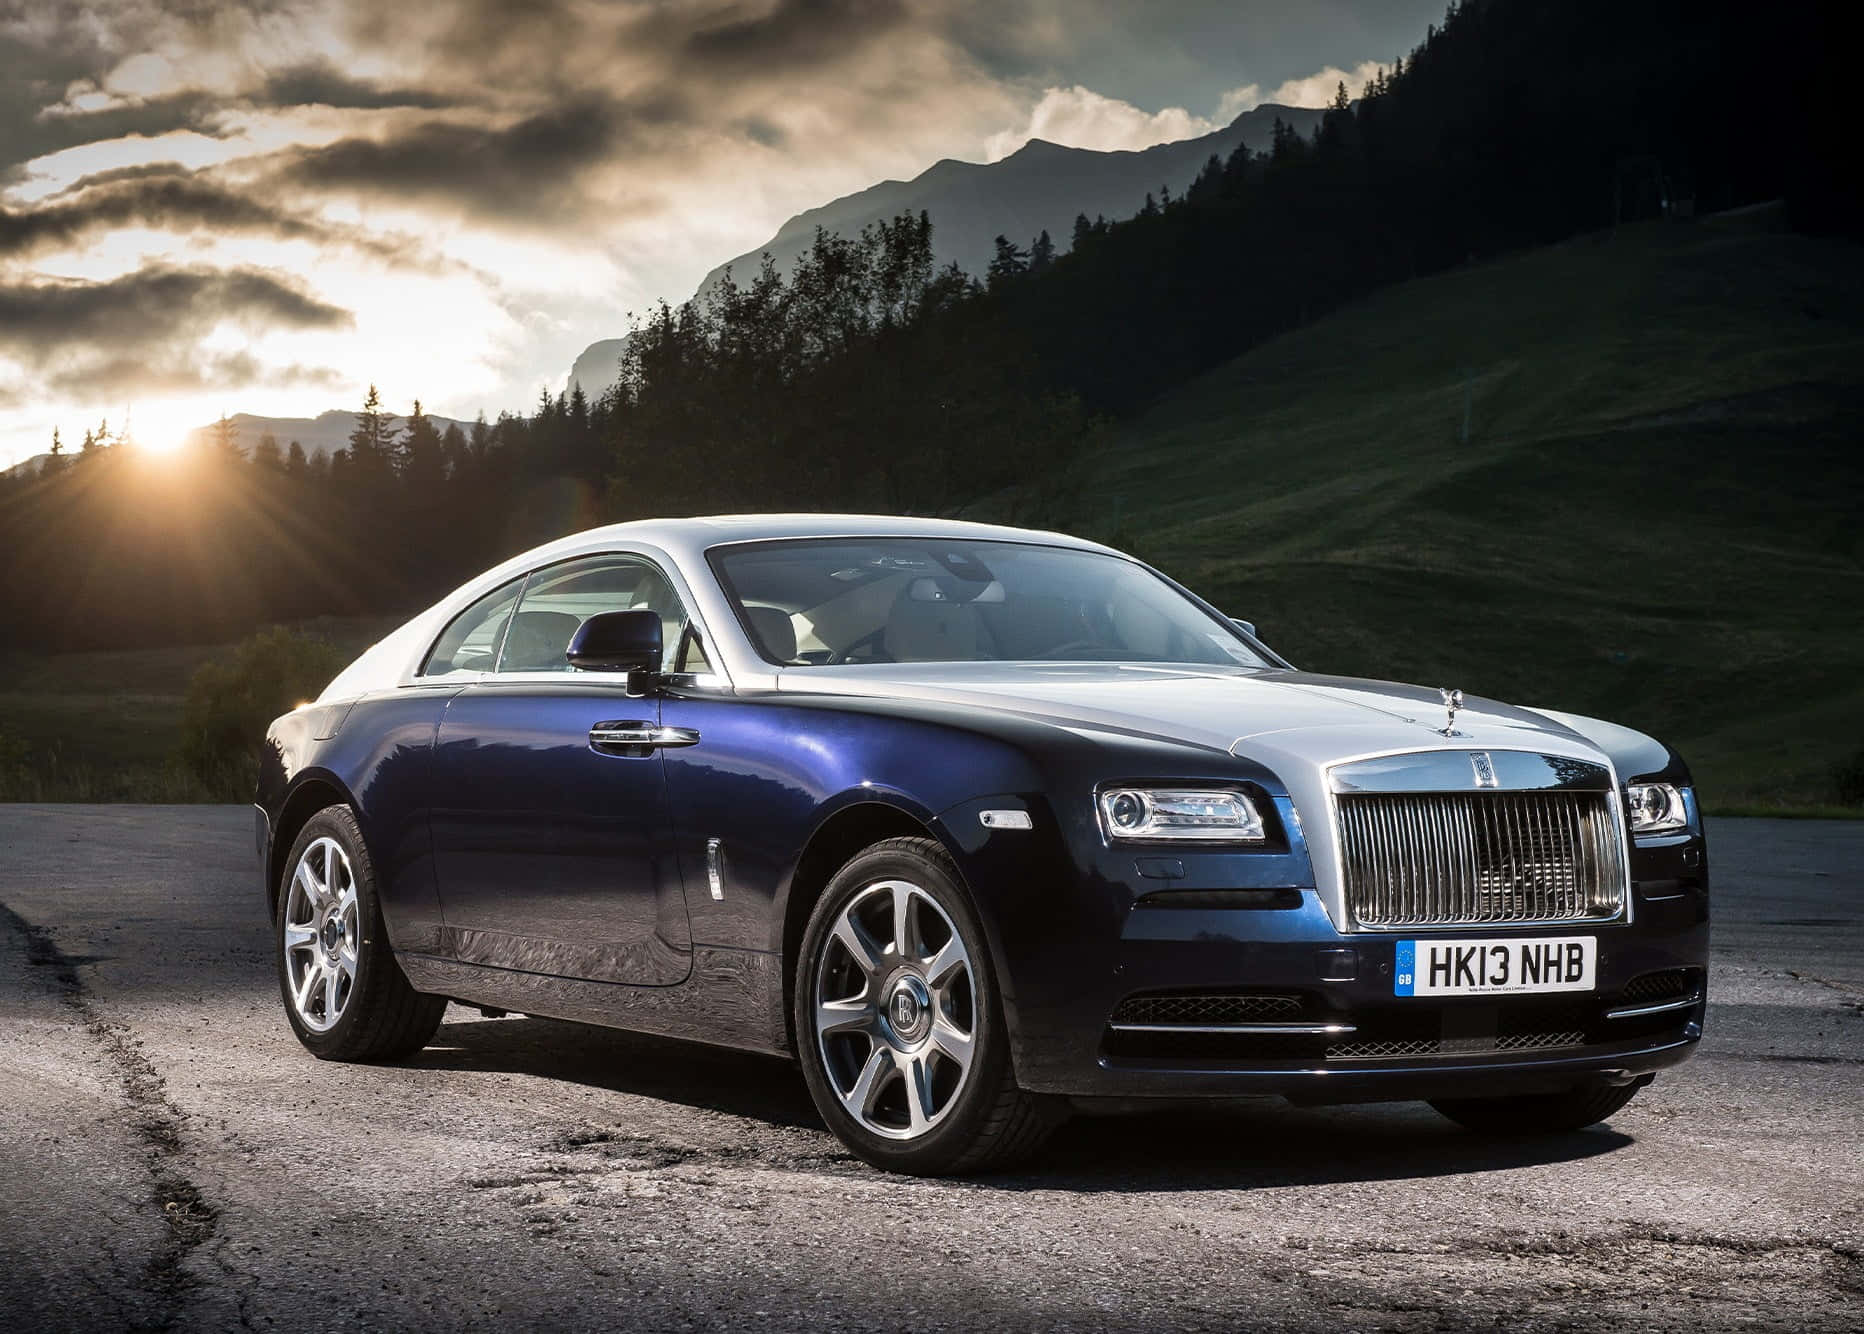 Luxury Rolls Royce on display in dramatic lighting